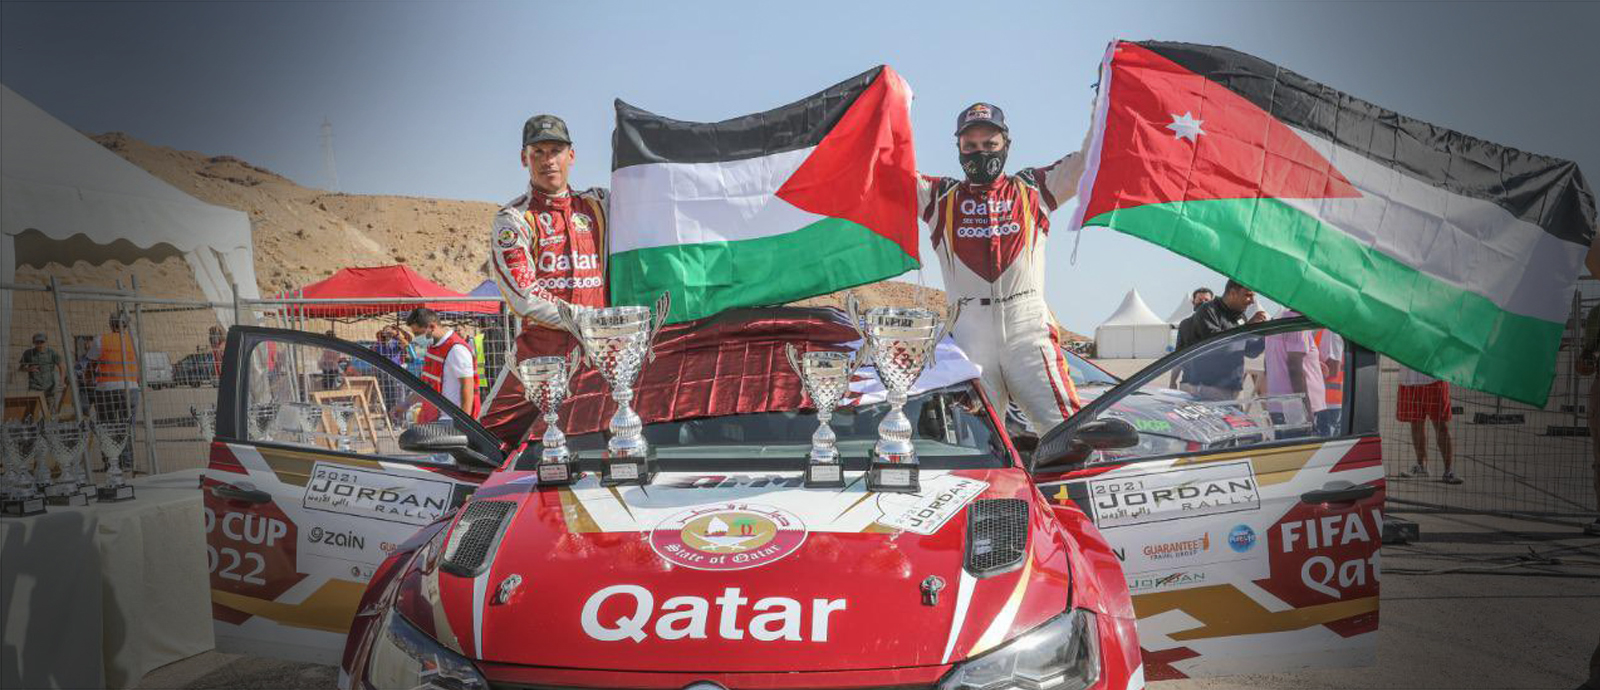 Nasser Al Attiyah romps to historic 14th victory in Jordan Rally